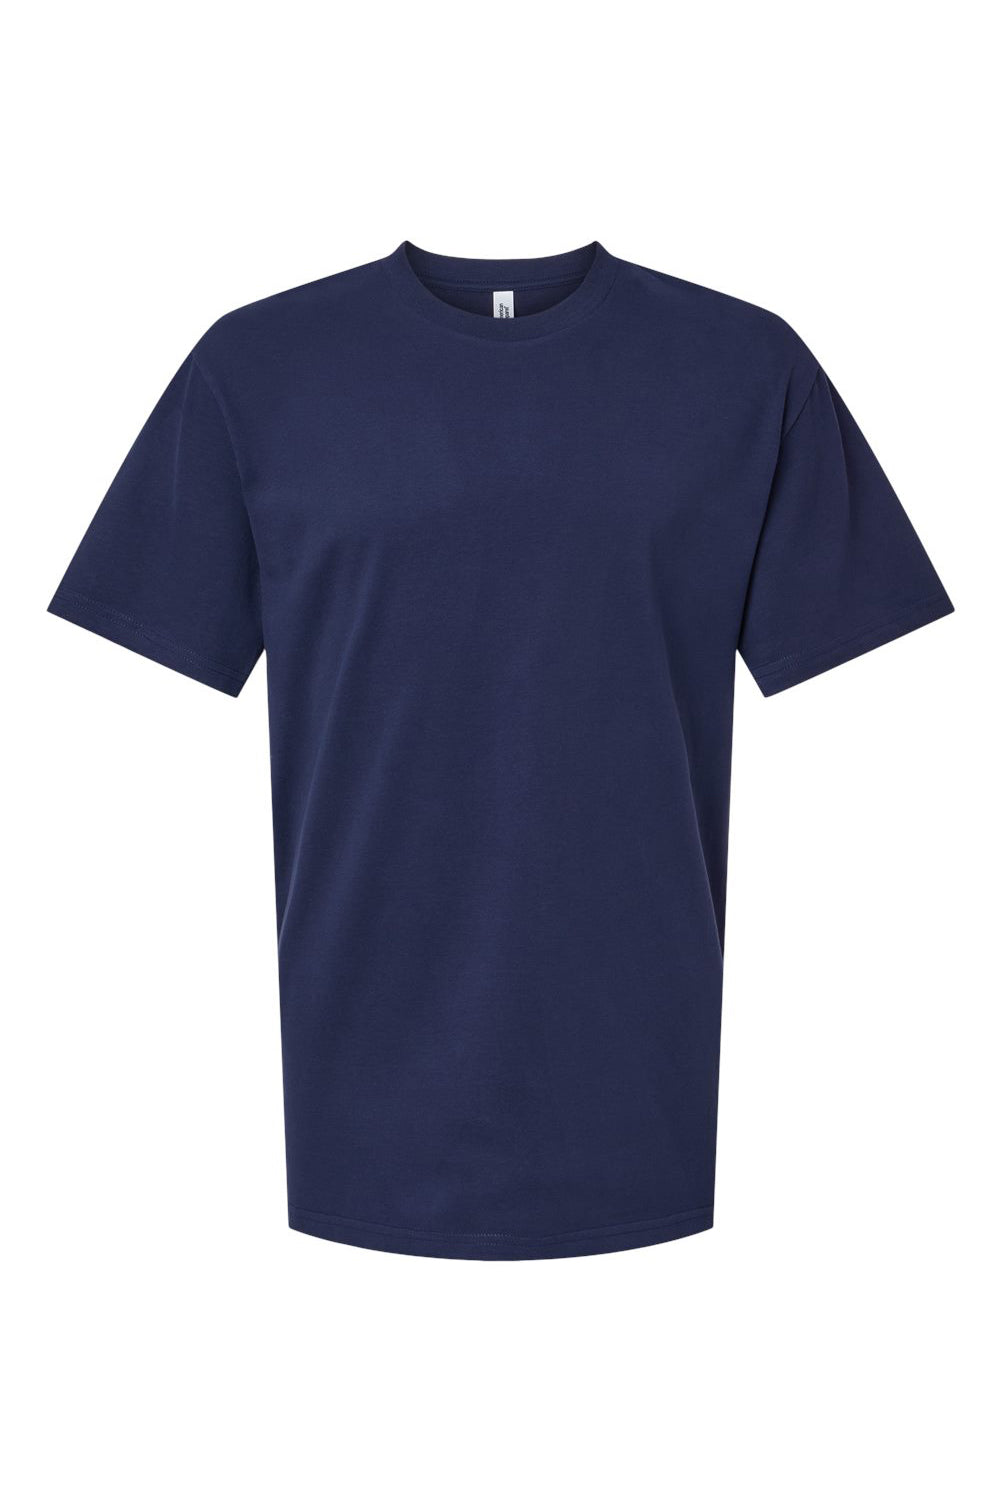 American Apparel 5389 Mens Sueded Cloud Short Sleeve Crewneck T-Shirt Navy Blue Flat Front